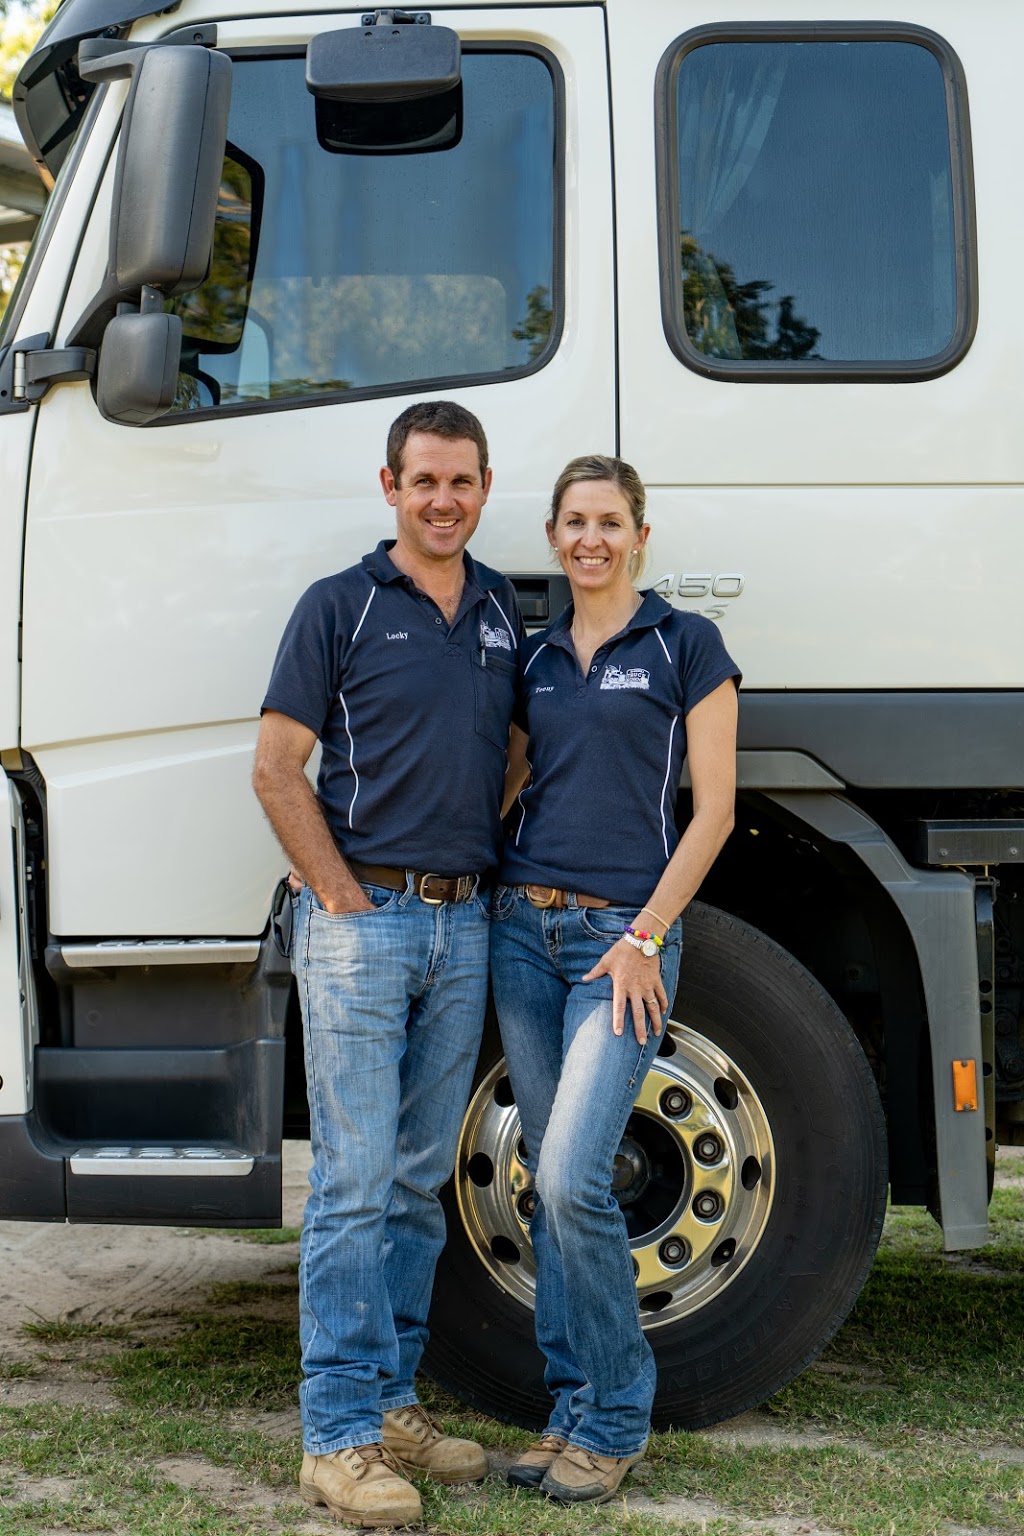 Mareeba Truck School |  | 147 Walsh St, Mareeba QLD 4880, Australia | 0407821790 OR +61 407 821 790